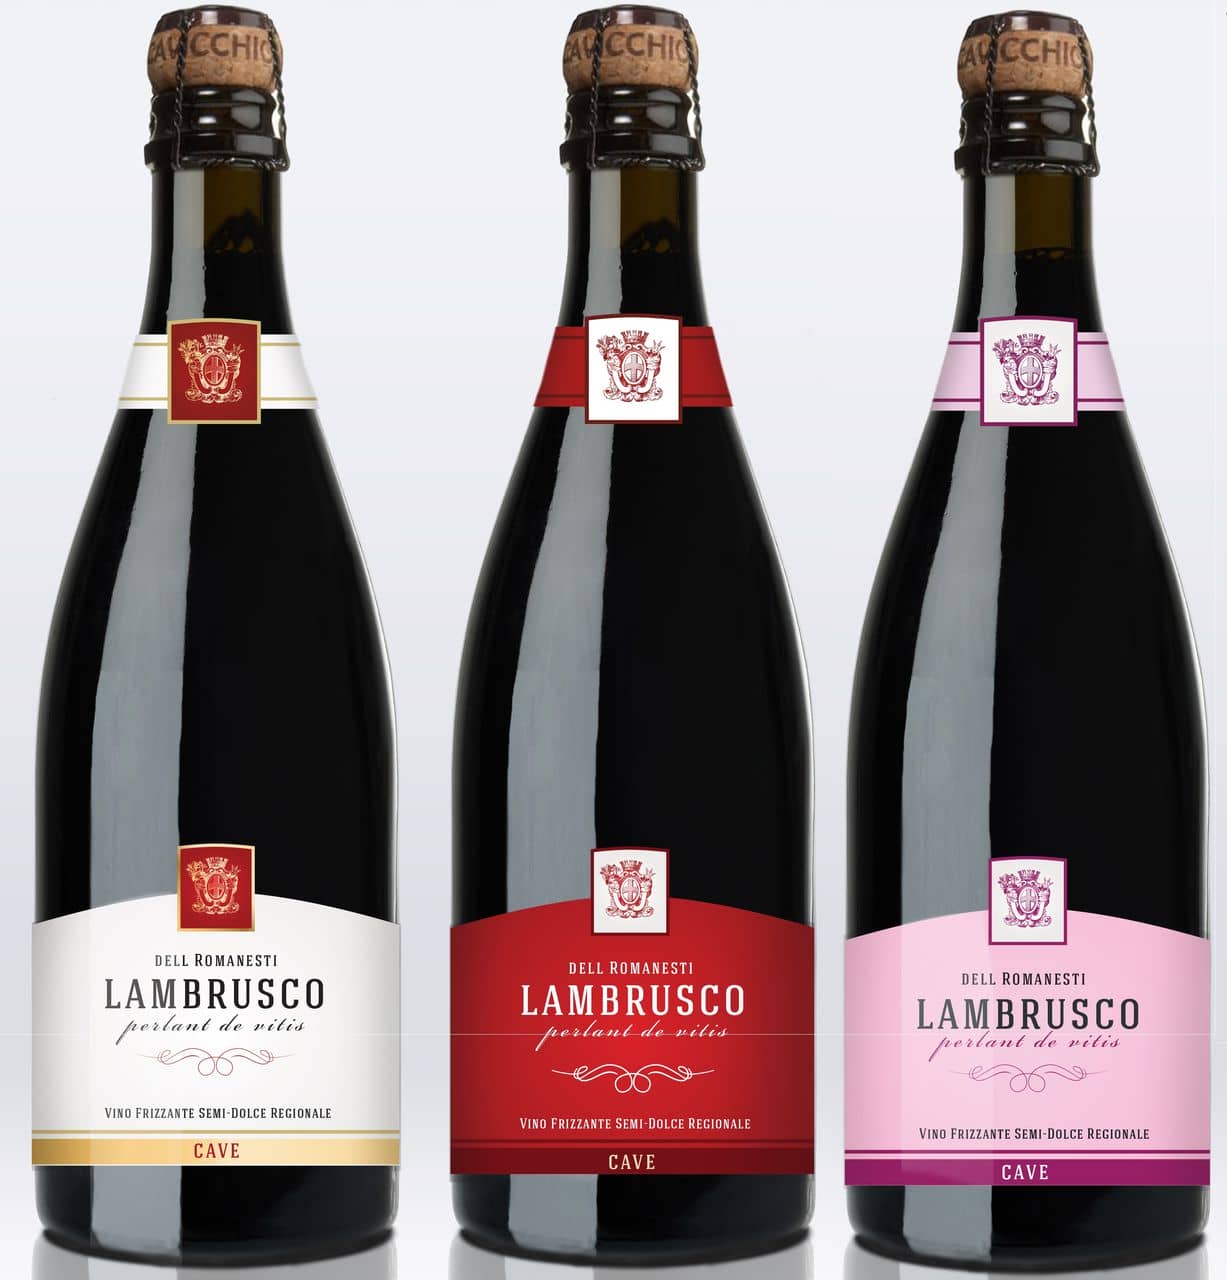 Maria lambrusco. Ламбруско вино игристое красное белое. Ламбруско вино игристое красное Италия. Вино Ламбруско красное полусладкое. Игристое вино Ламбруско белое Италия.